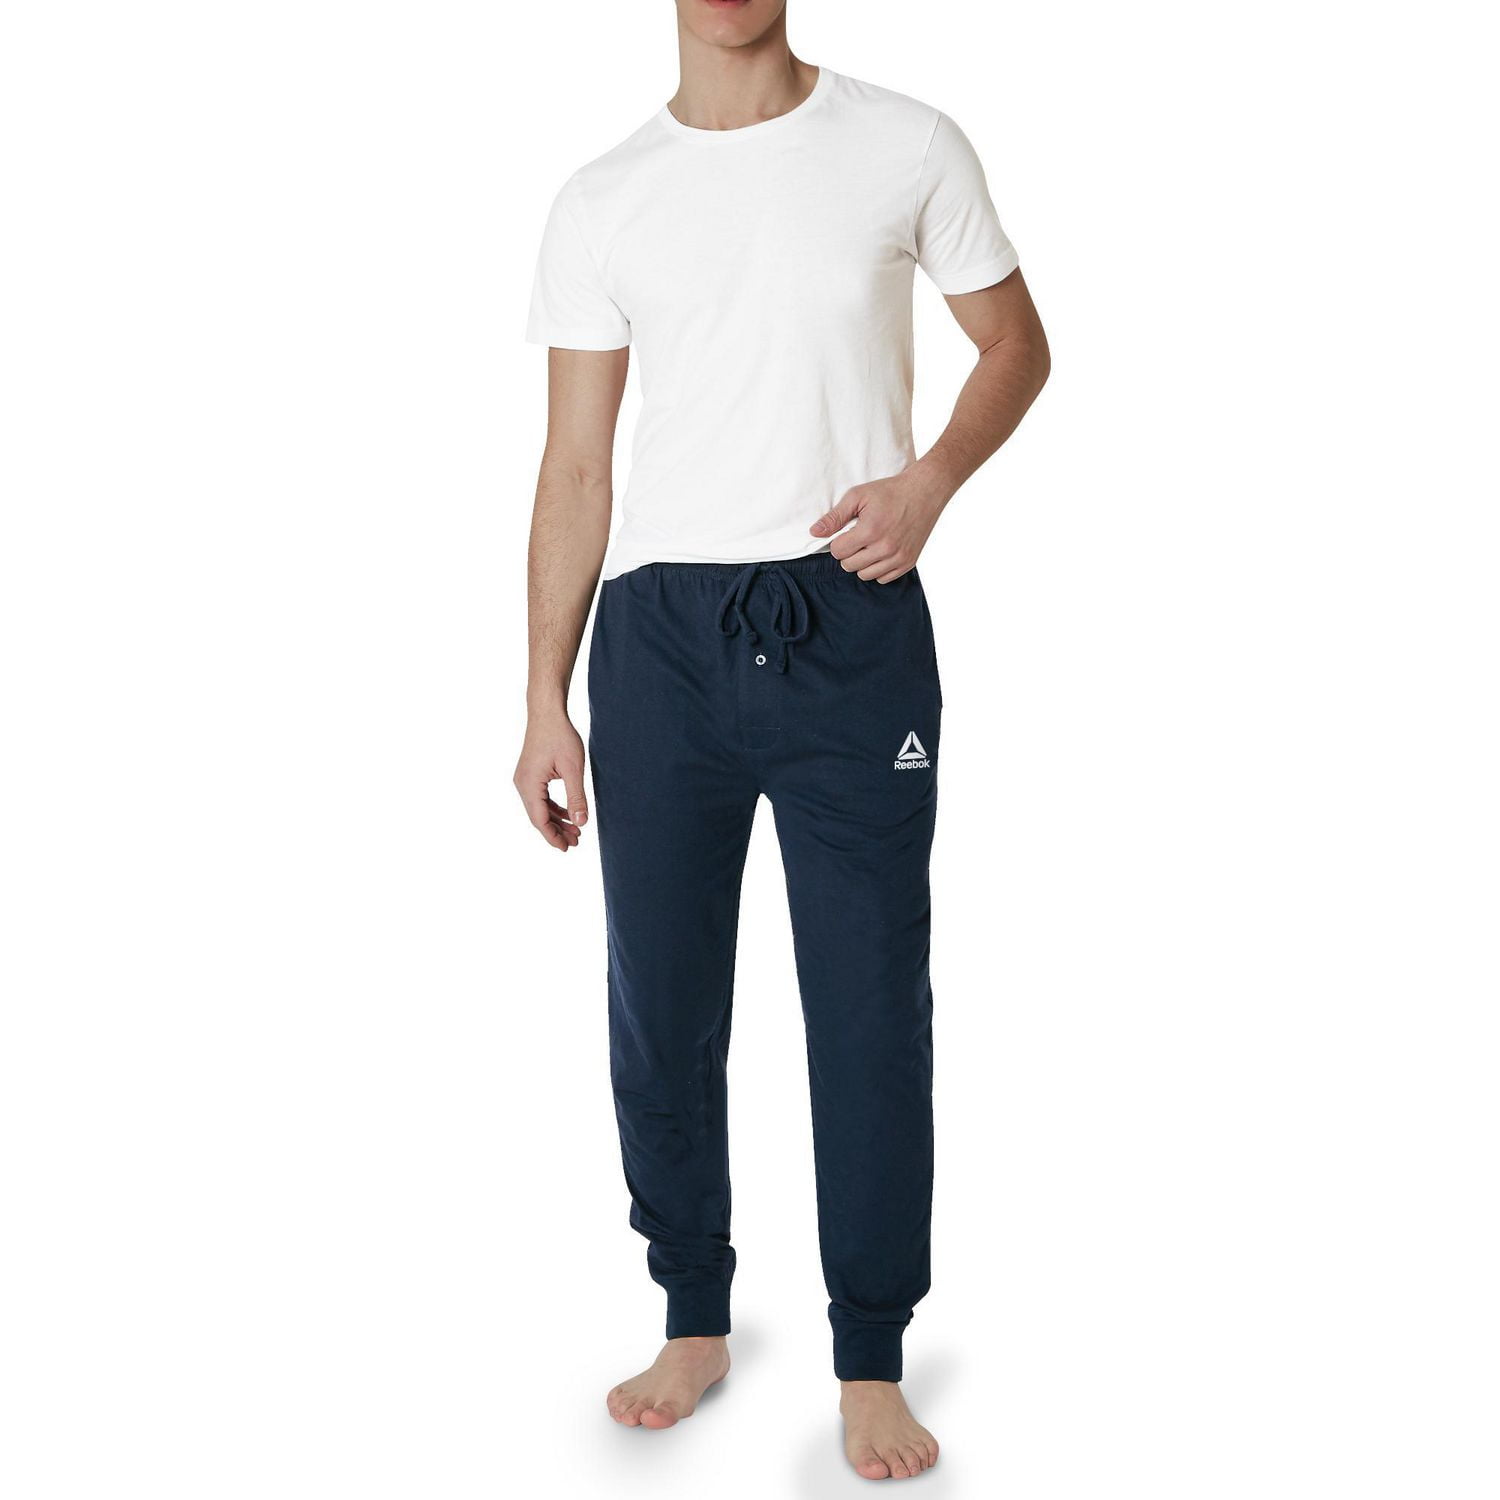 Reebok Men's Pajama Jogger Pants - Lightweight Knit Lounge Sleep